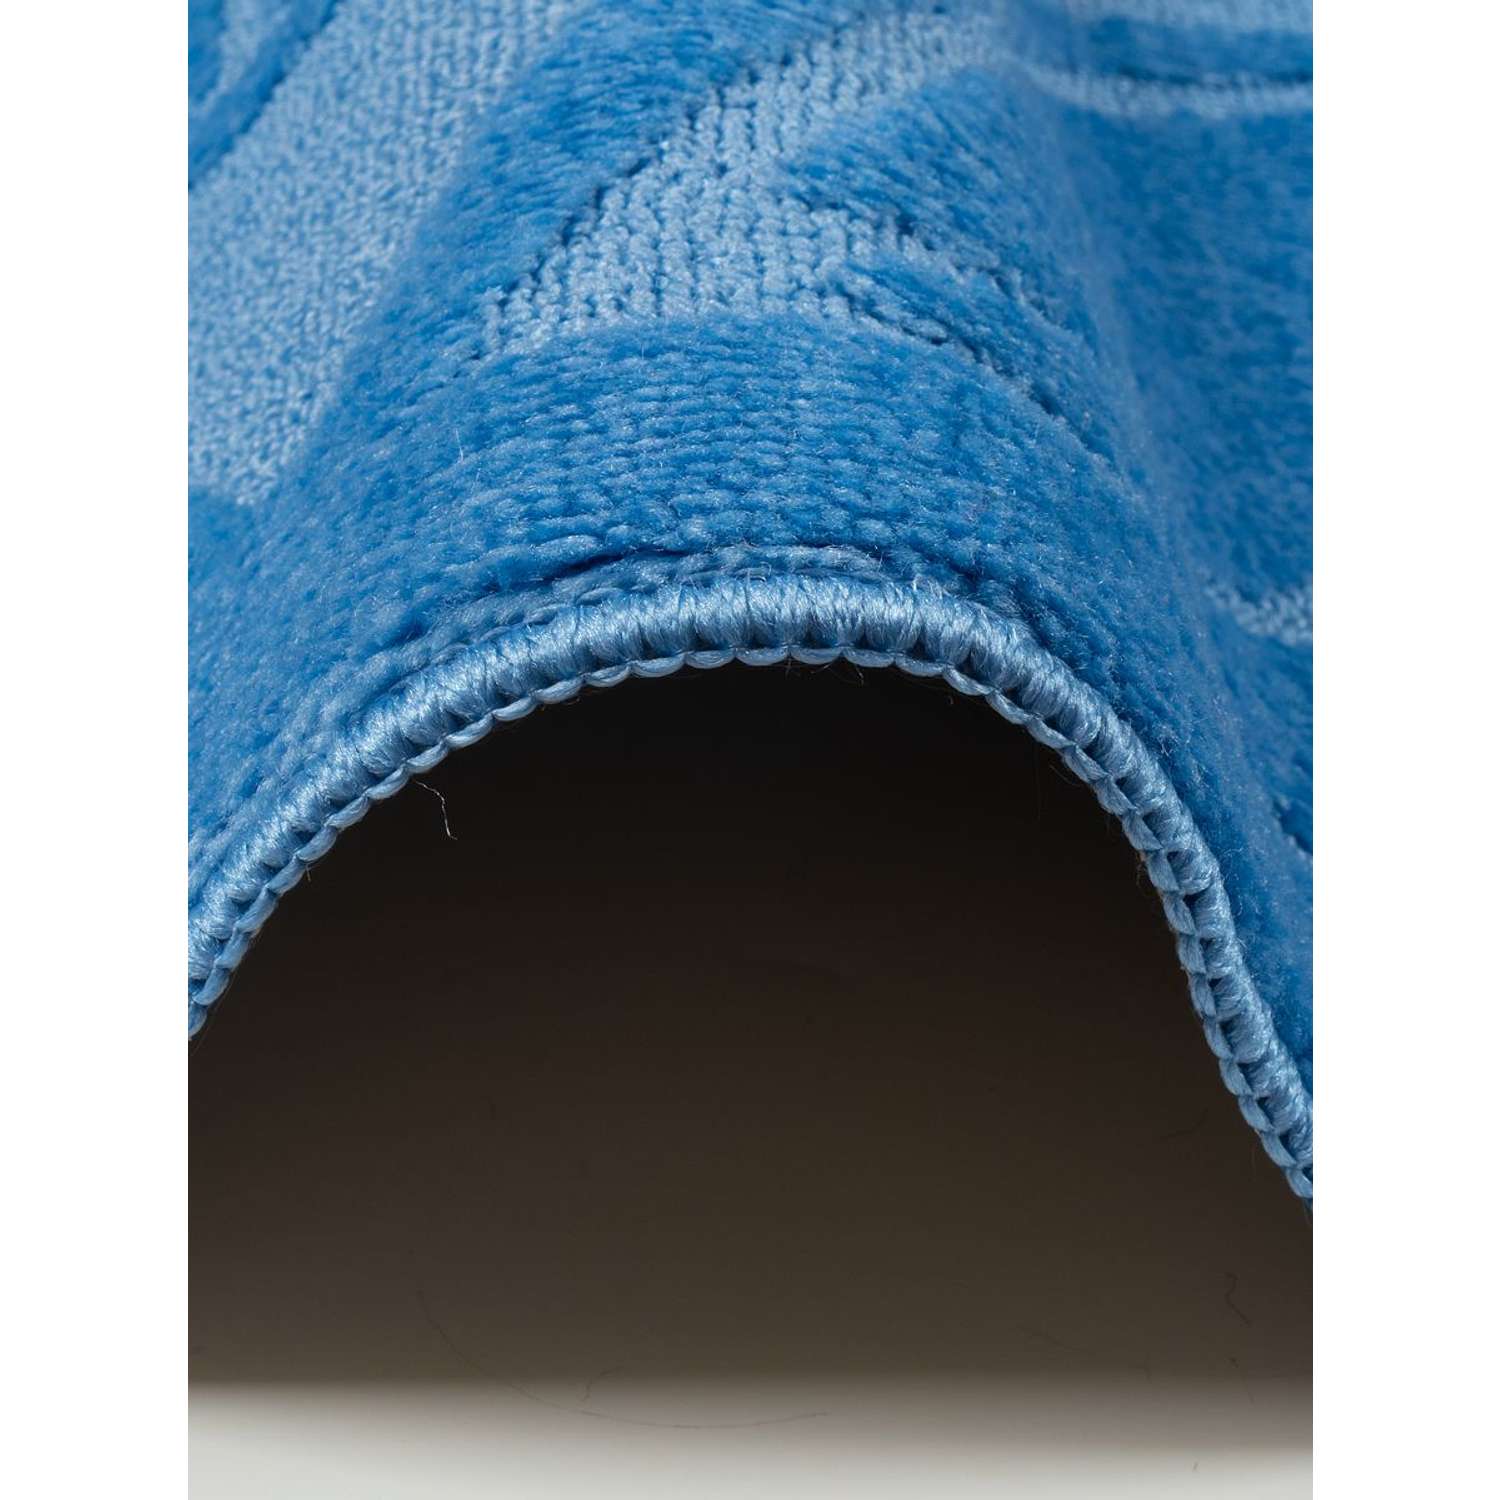 Коврик для ванной и туалета Confetti 60х100 см противоскользящий blue - фото 4